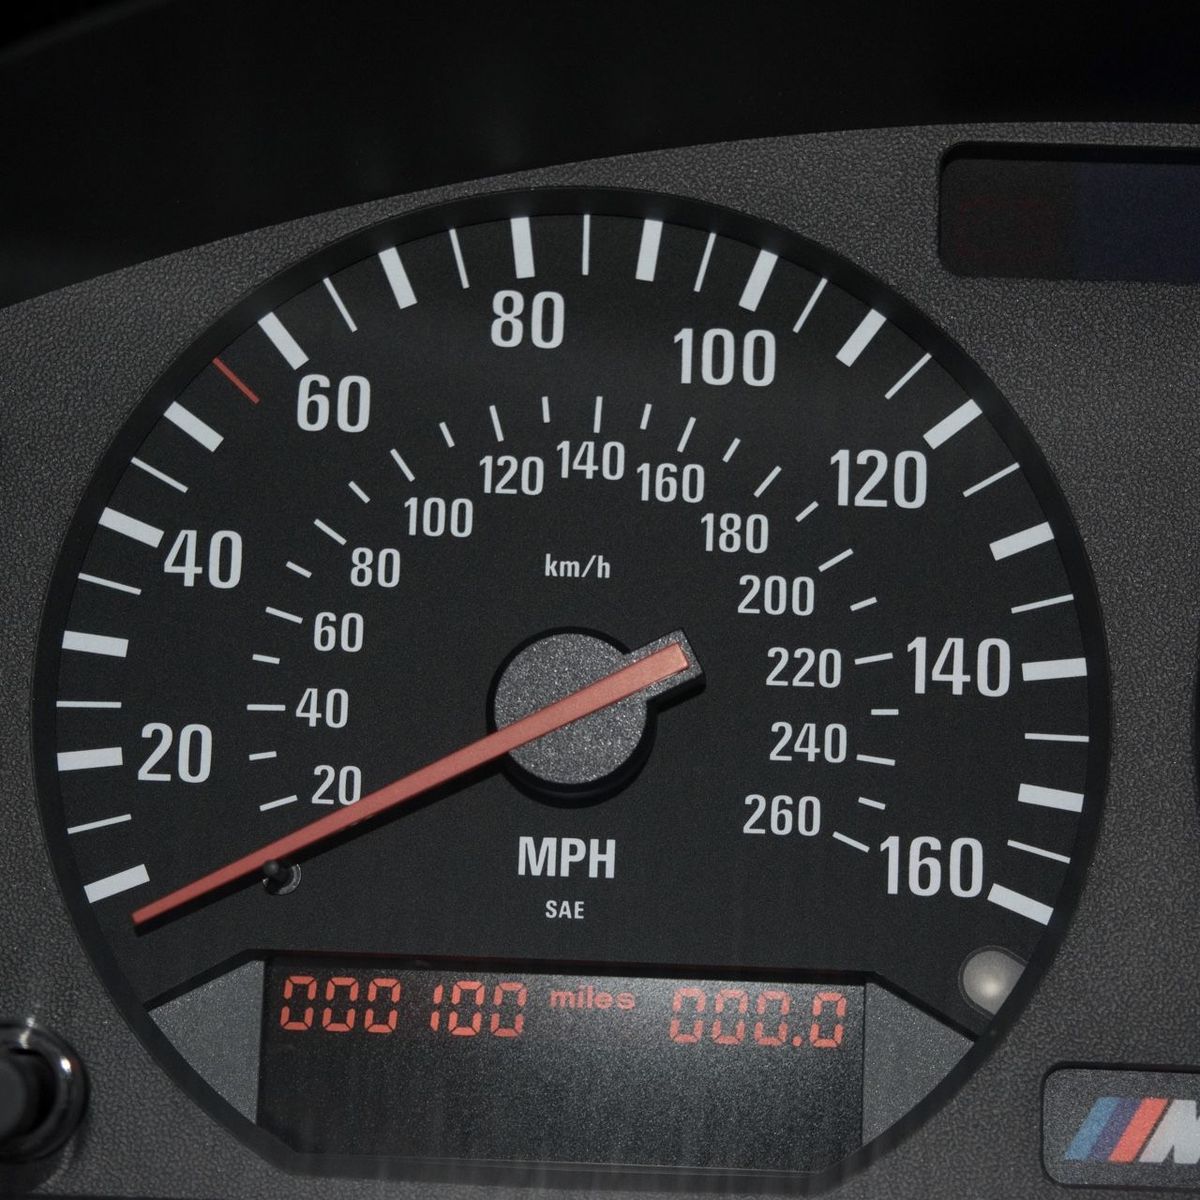 How to Fix Speedometer - Adjust Speedo and Odometer for New Tires